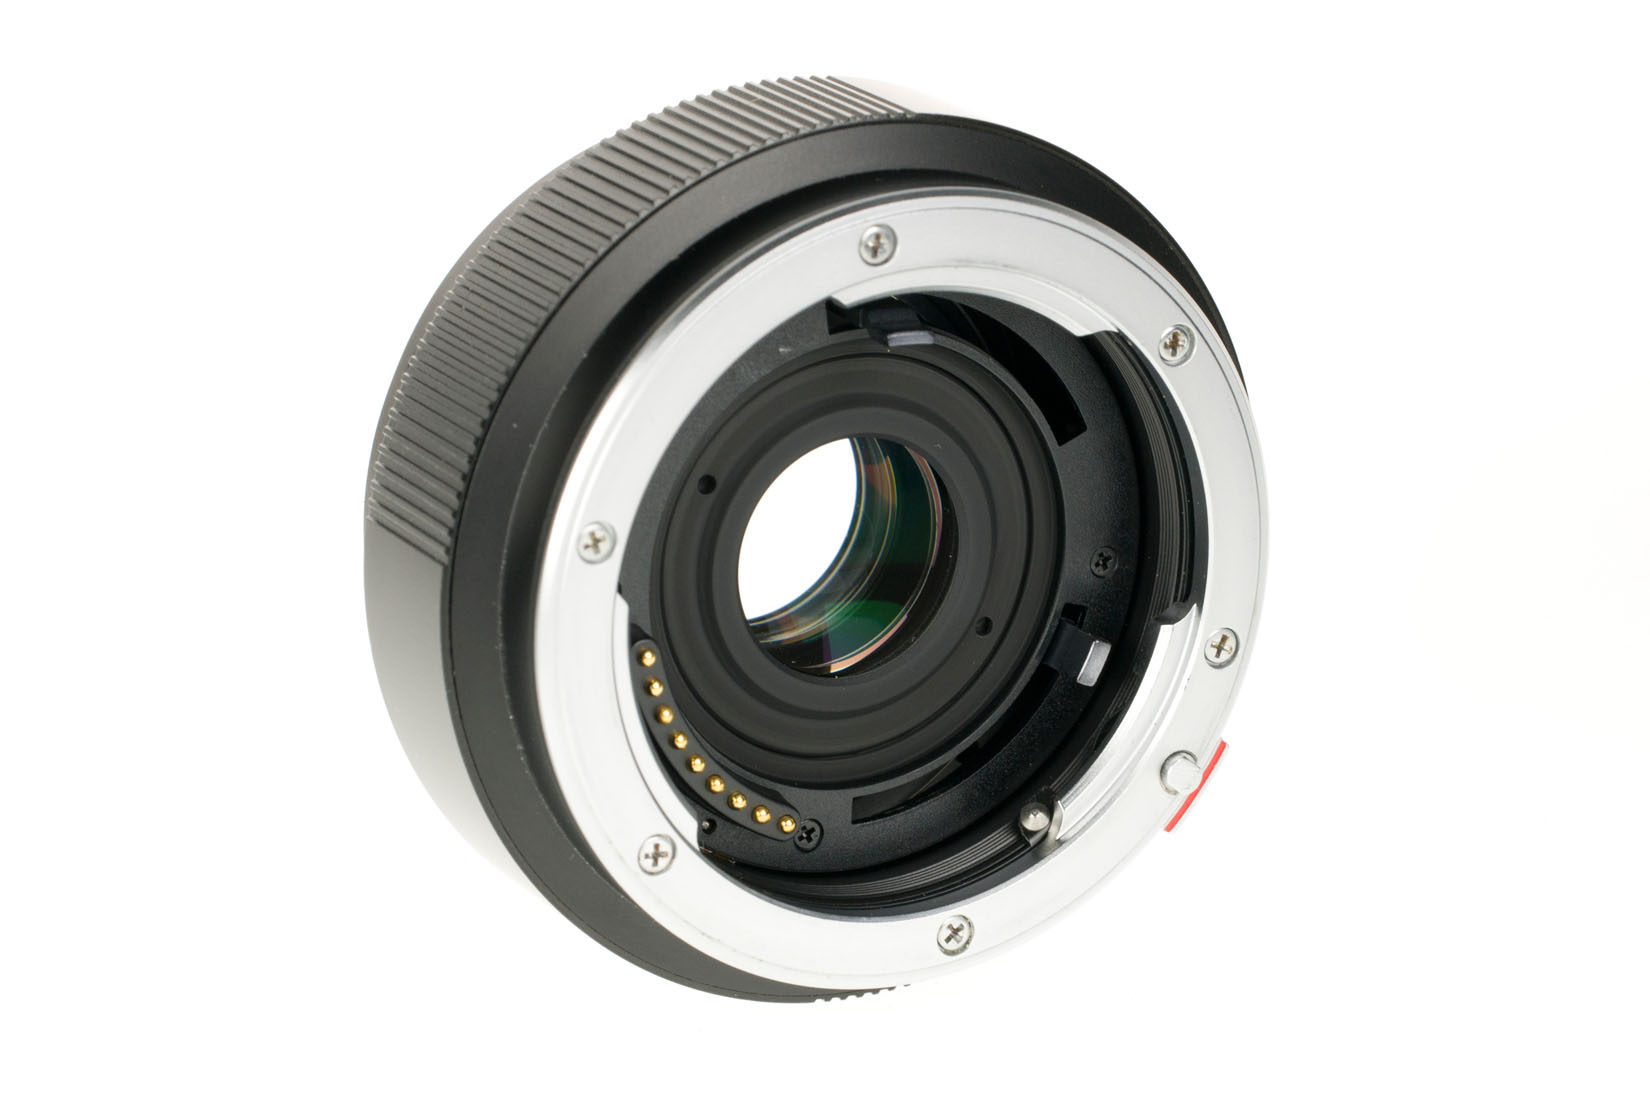 Leica APO-Extender R 2x ROM 11269